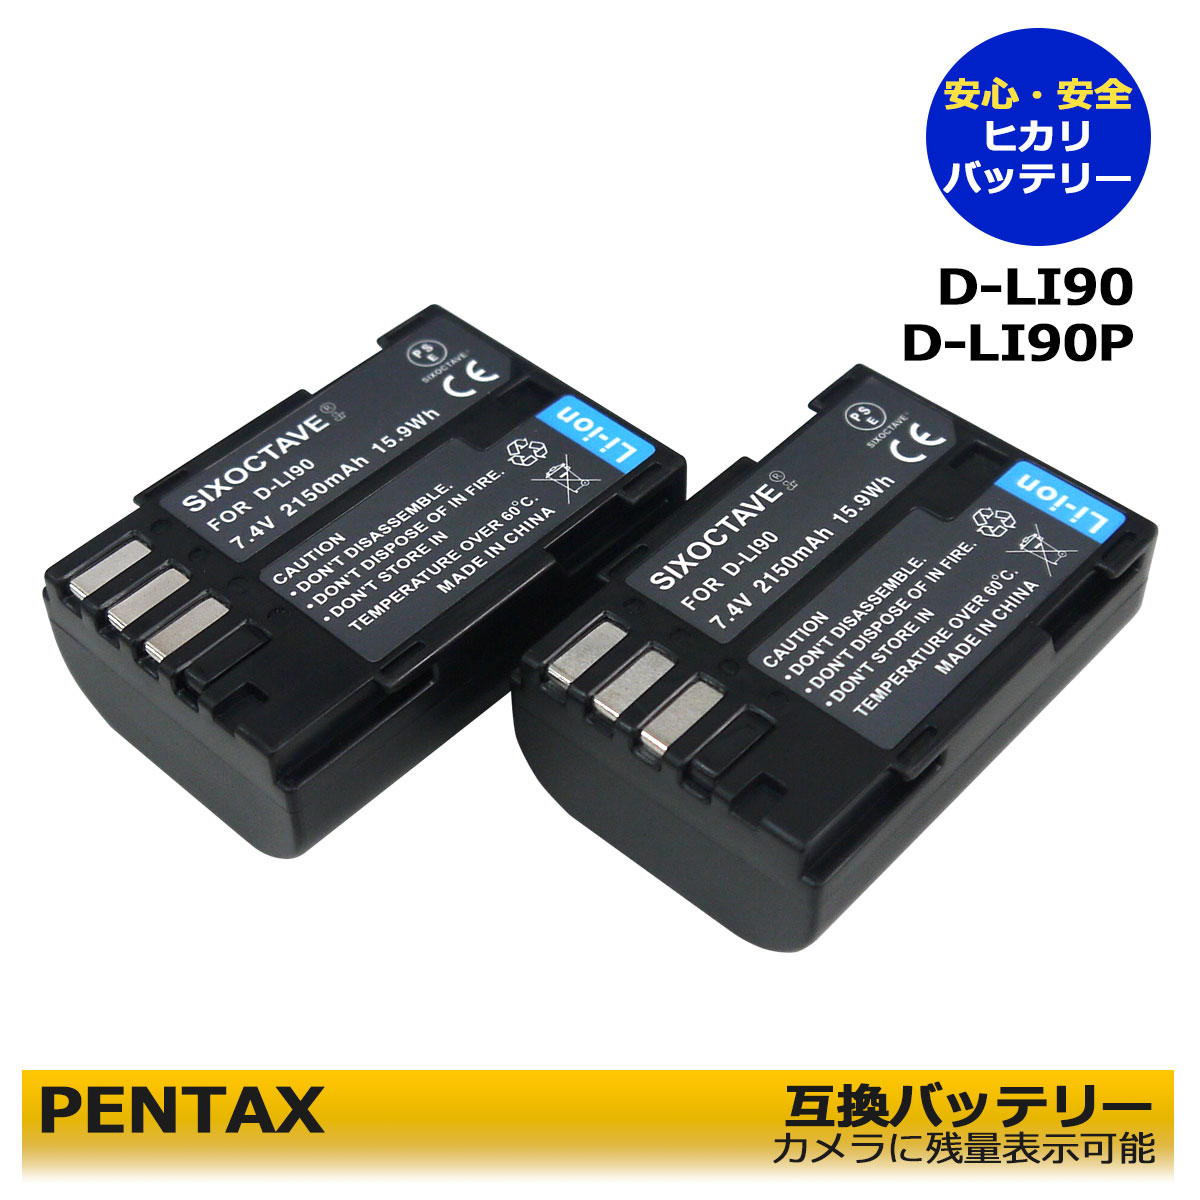 PENTAX D-LI90P 互換バッテリー 2個 D-LI90 対応 645 / 645D / 645Z / 645Z IR / K-01 / K-01 White×Blue / K-1 / K-3 / K-3 II / K-5 / K-5 II / K-5 IIs / K-7 / K-1 Mark II / PENTAX K-1 Mark II J limited 01 / PENTAX K-3 Mark III Monochrome